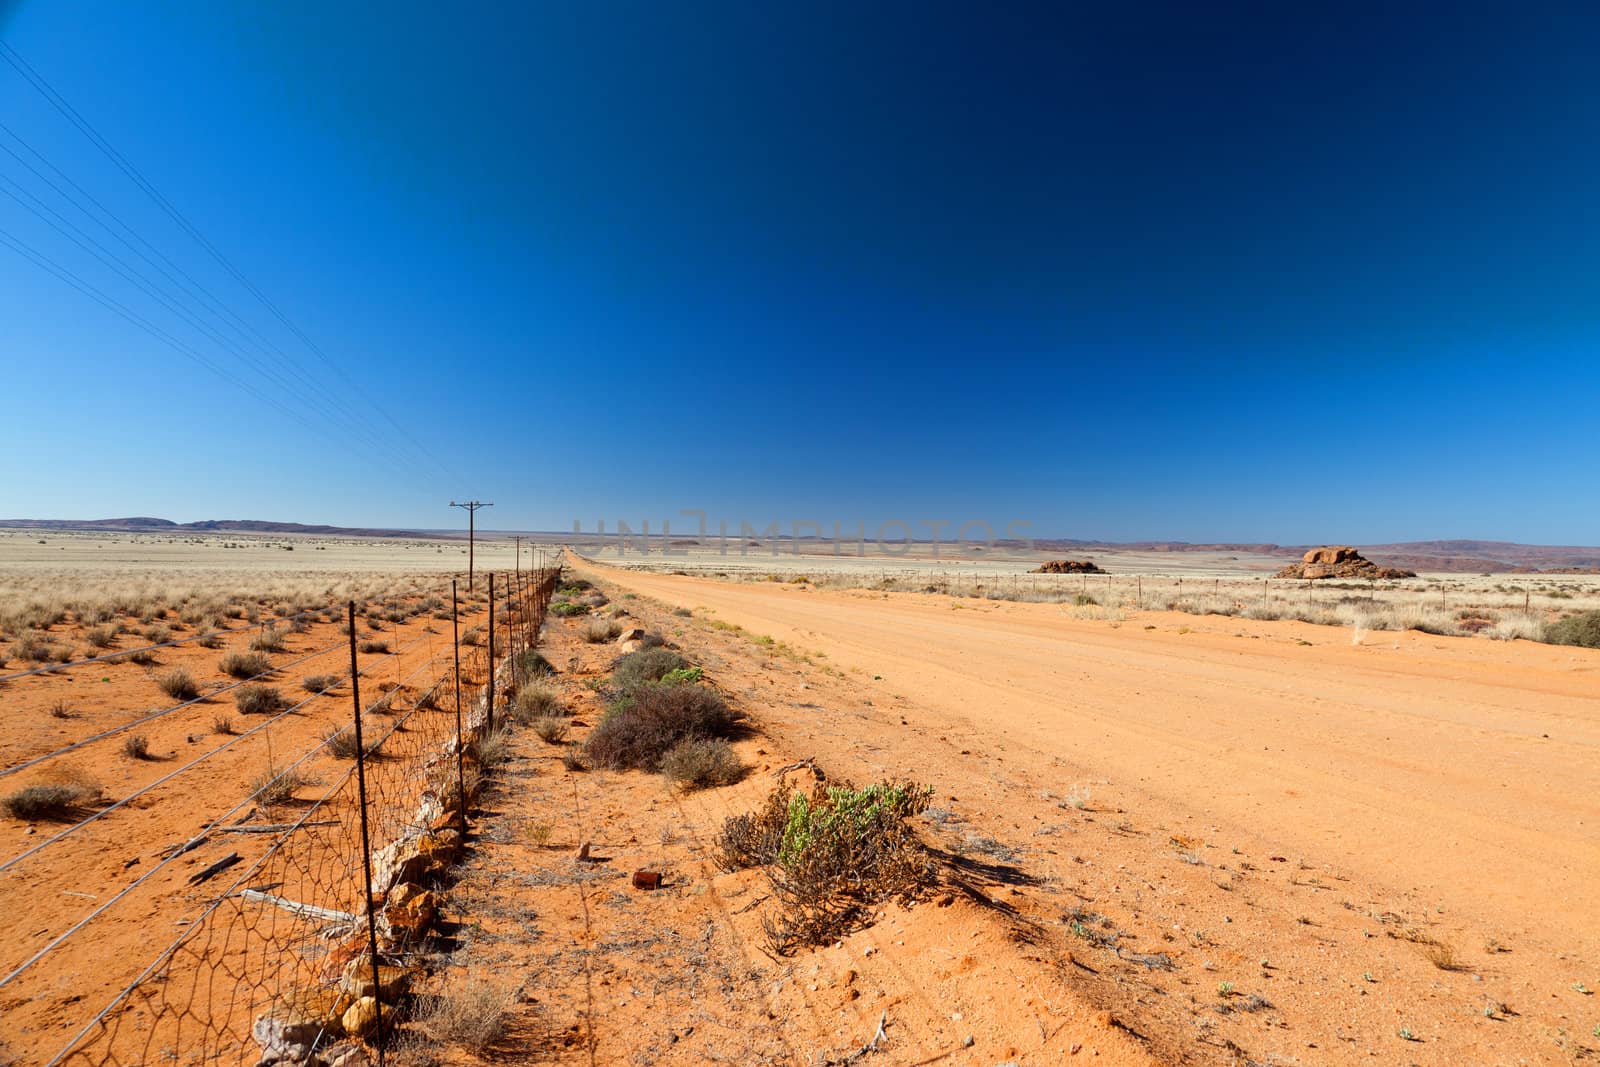 Road through a vast, arid landscape - horizontal
